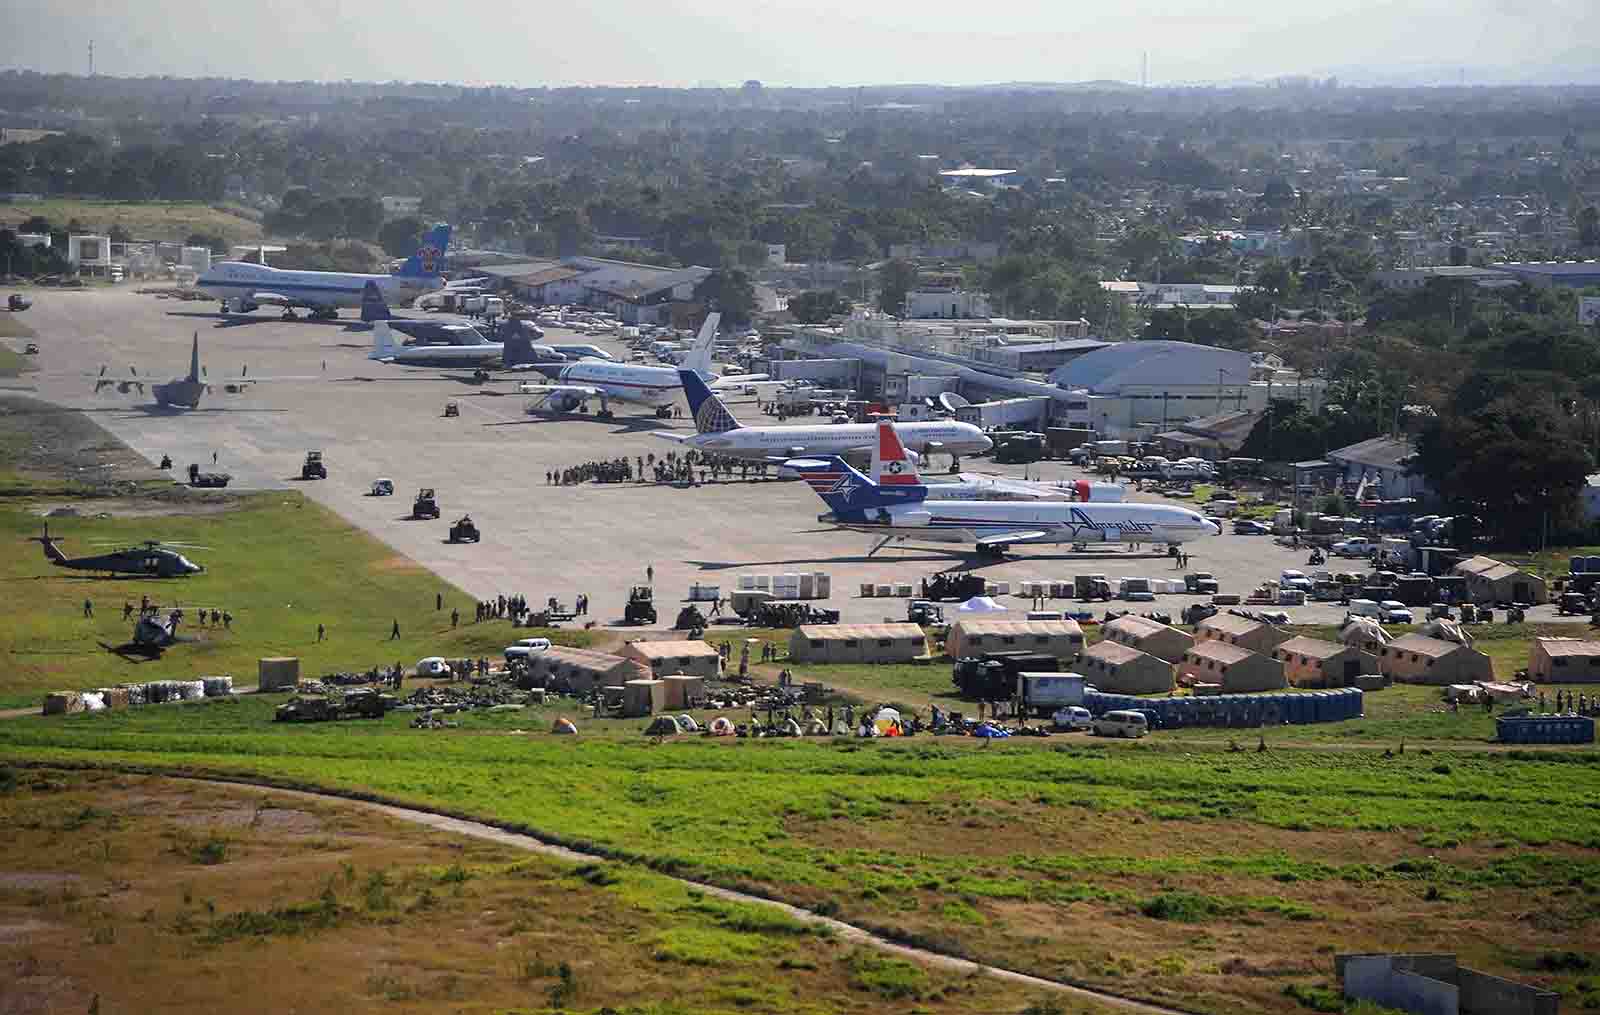 /cms/uploads/image/file/629159/Haiti_Airport.jpg